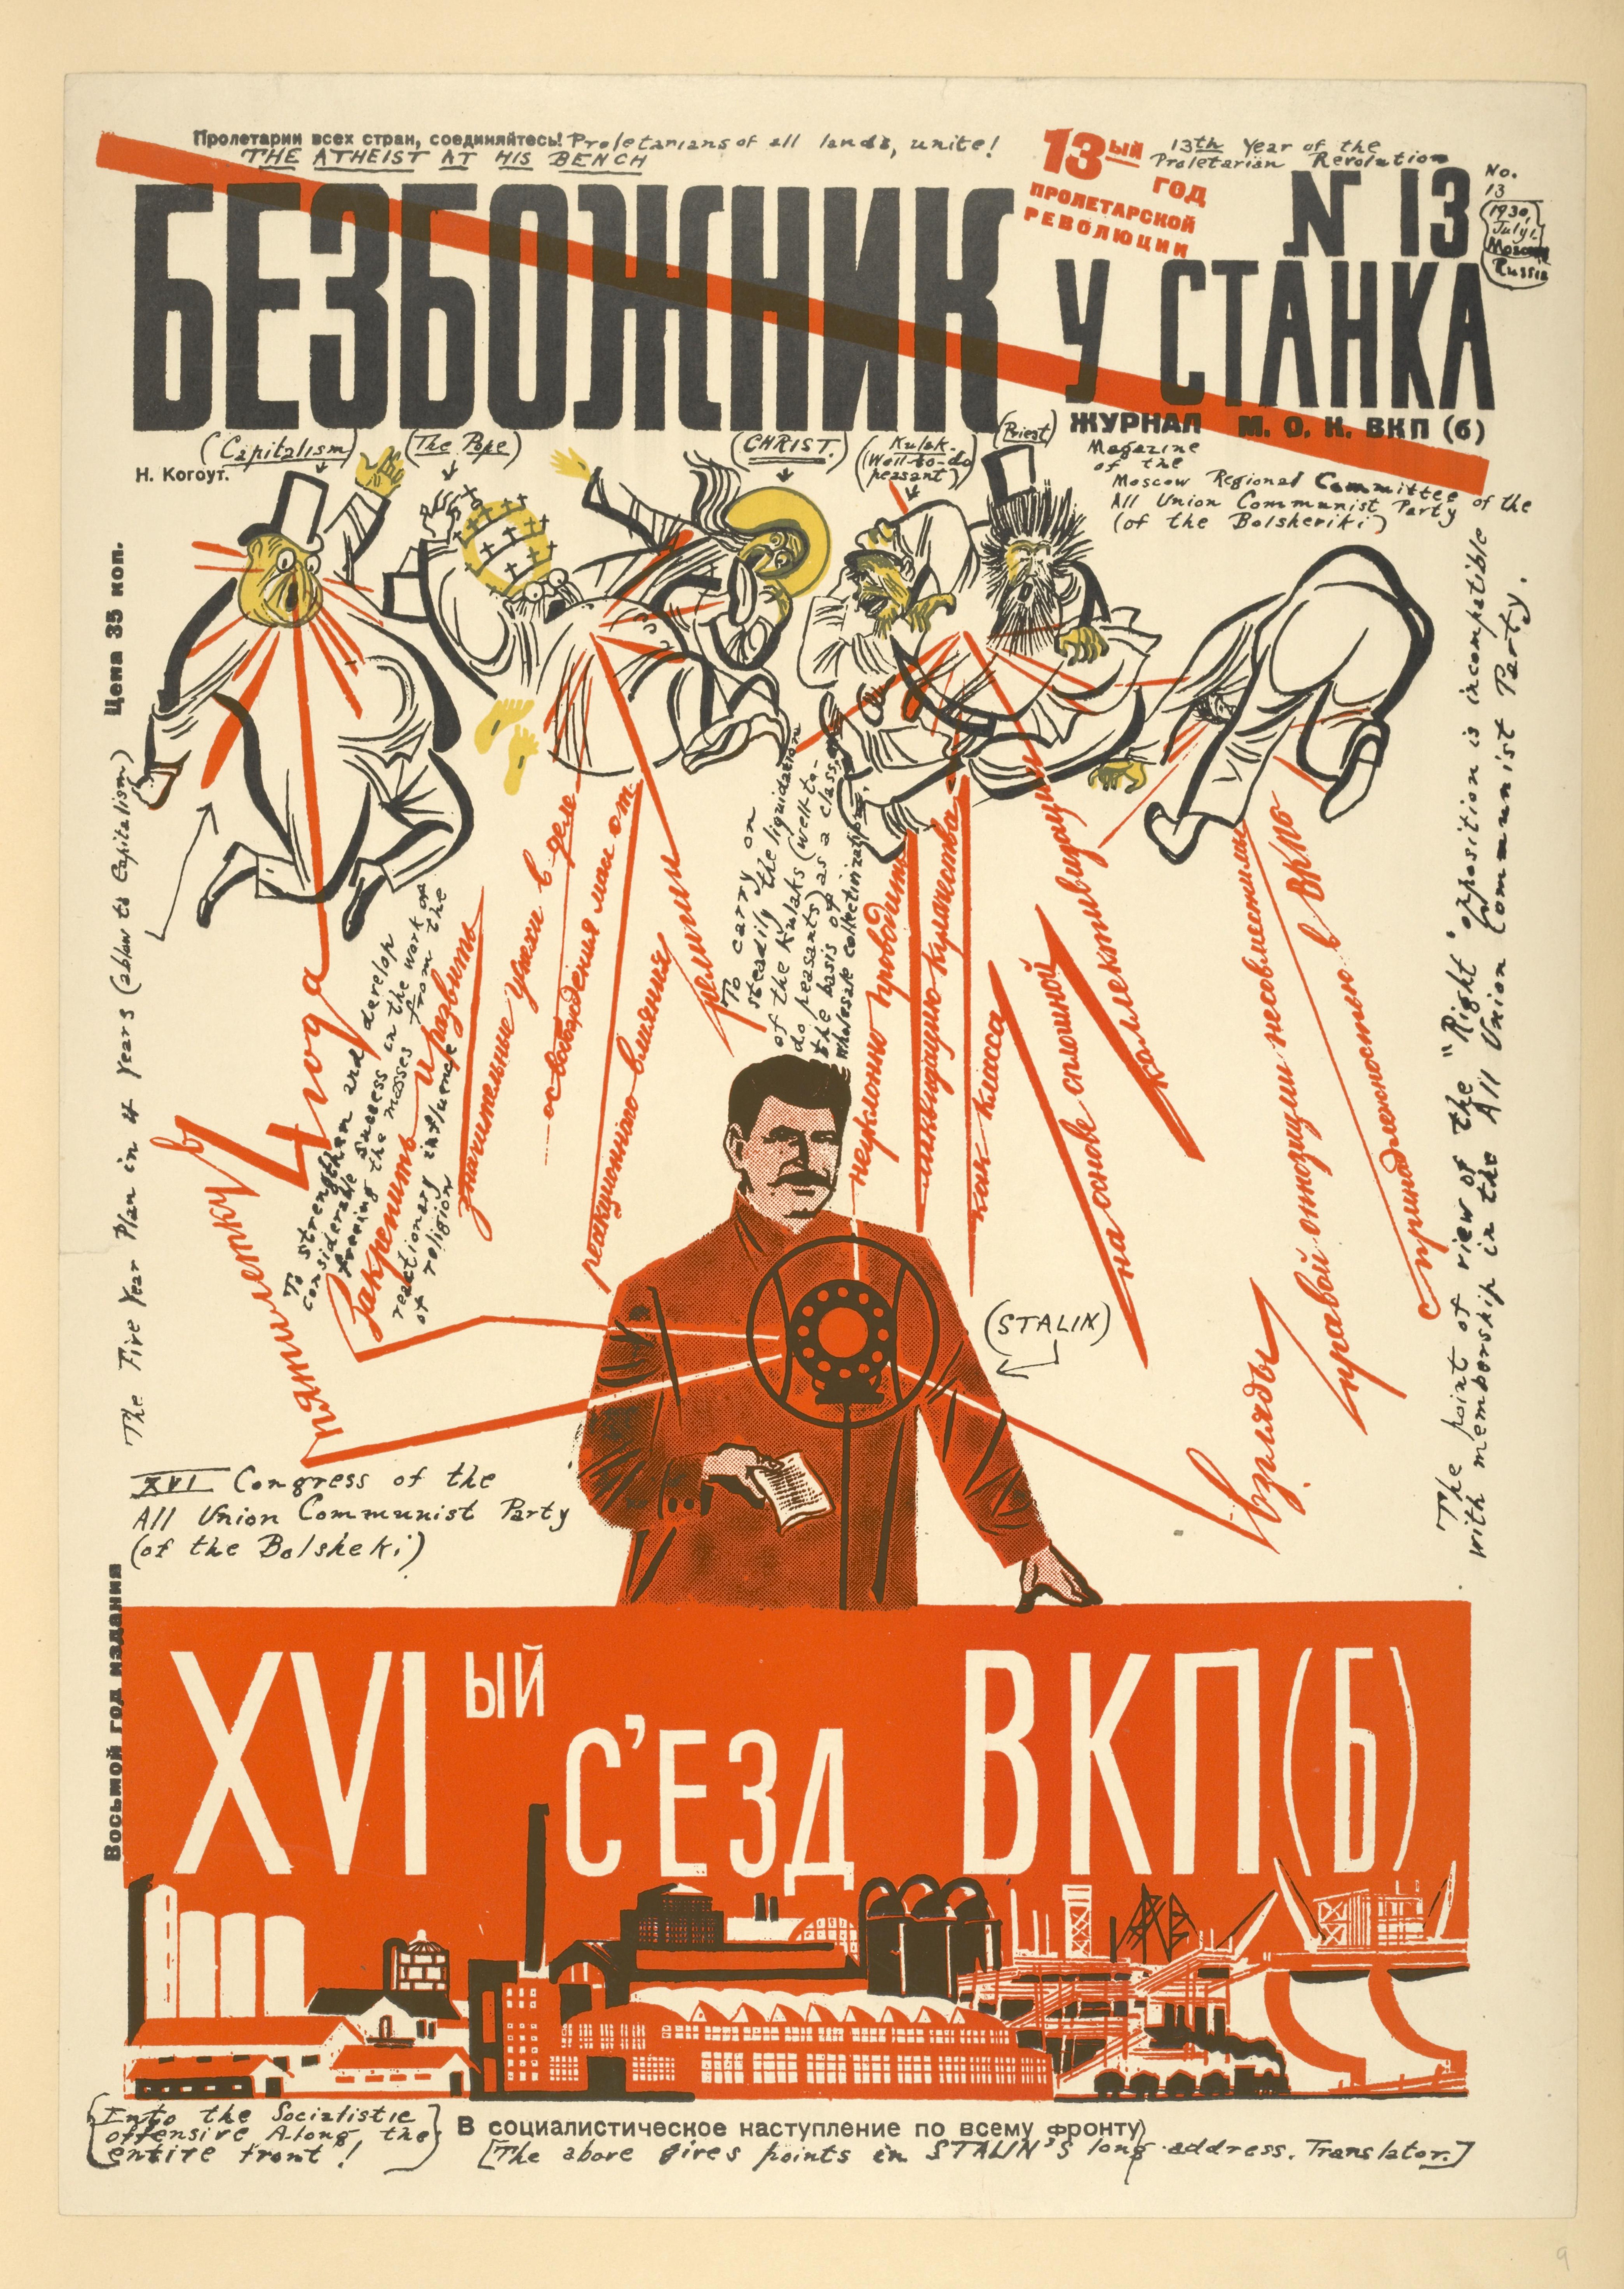 soviet anti-religious propaganda